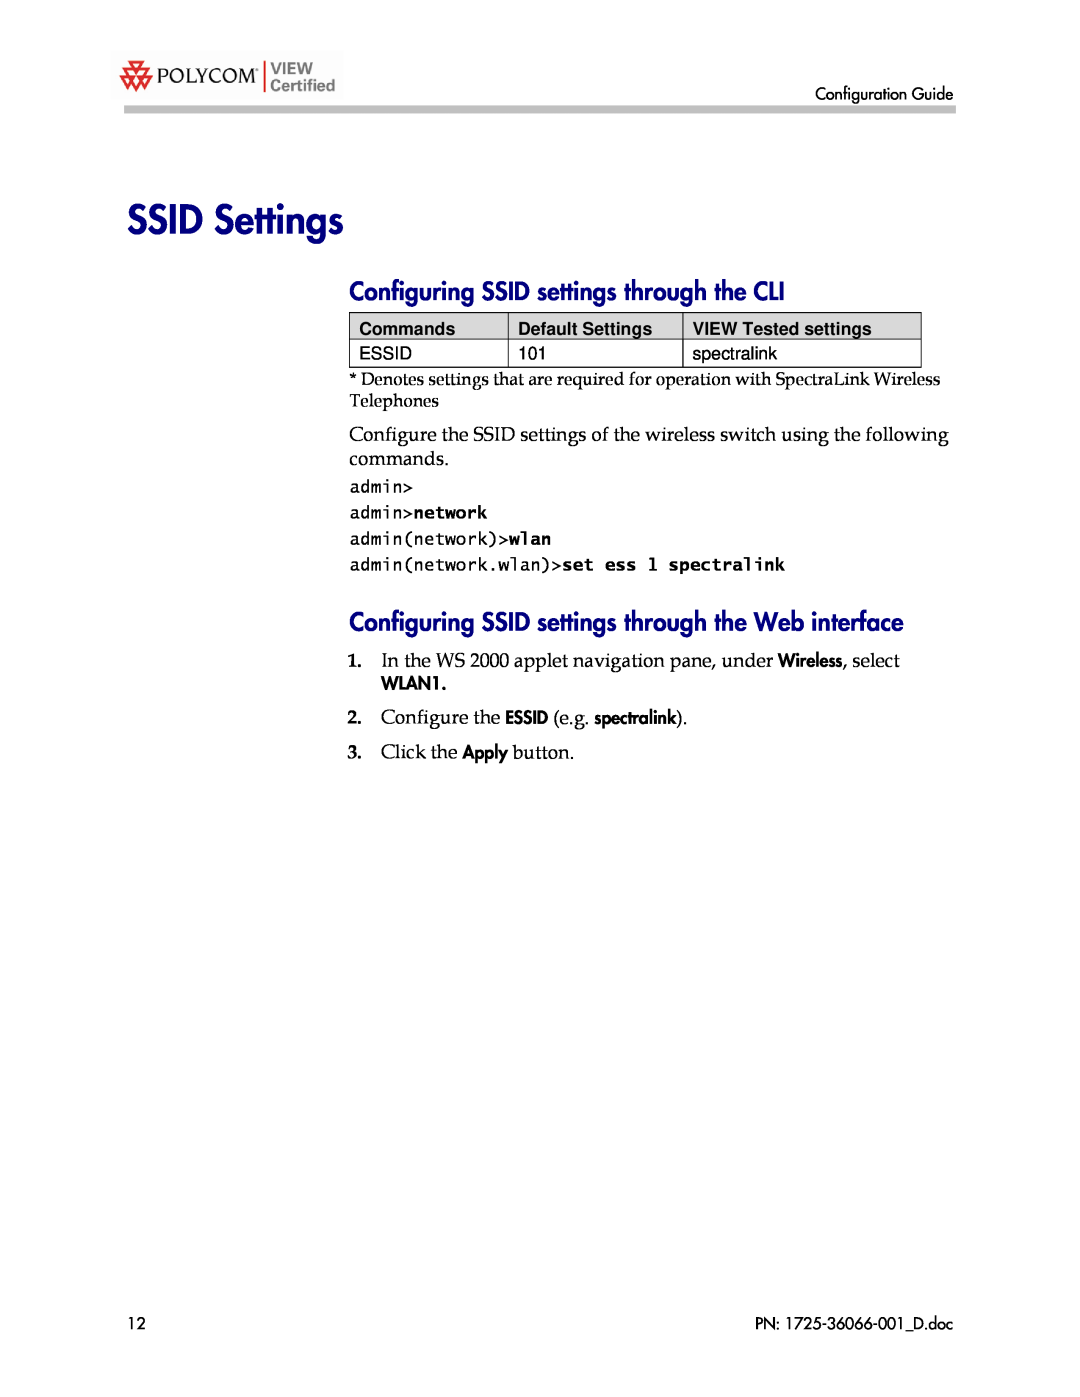 Motorola WS 2000 with AP 300 manual SSID Settings, Configuring SSID settings through the CLI 